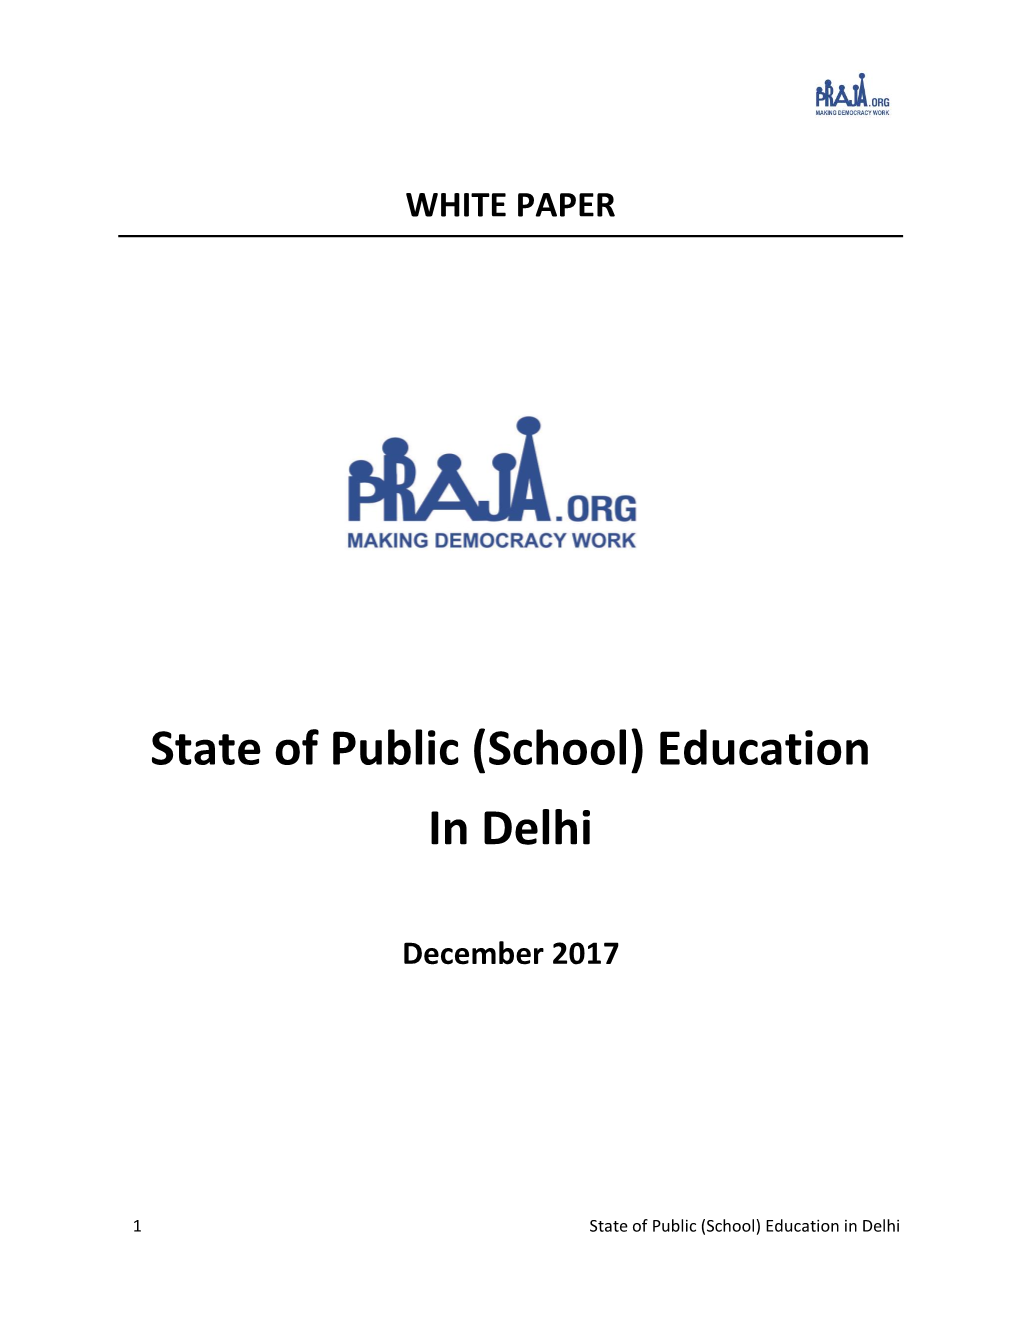 (School) Education in Delhi